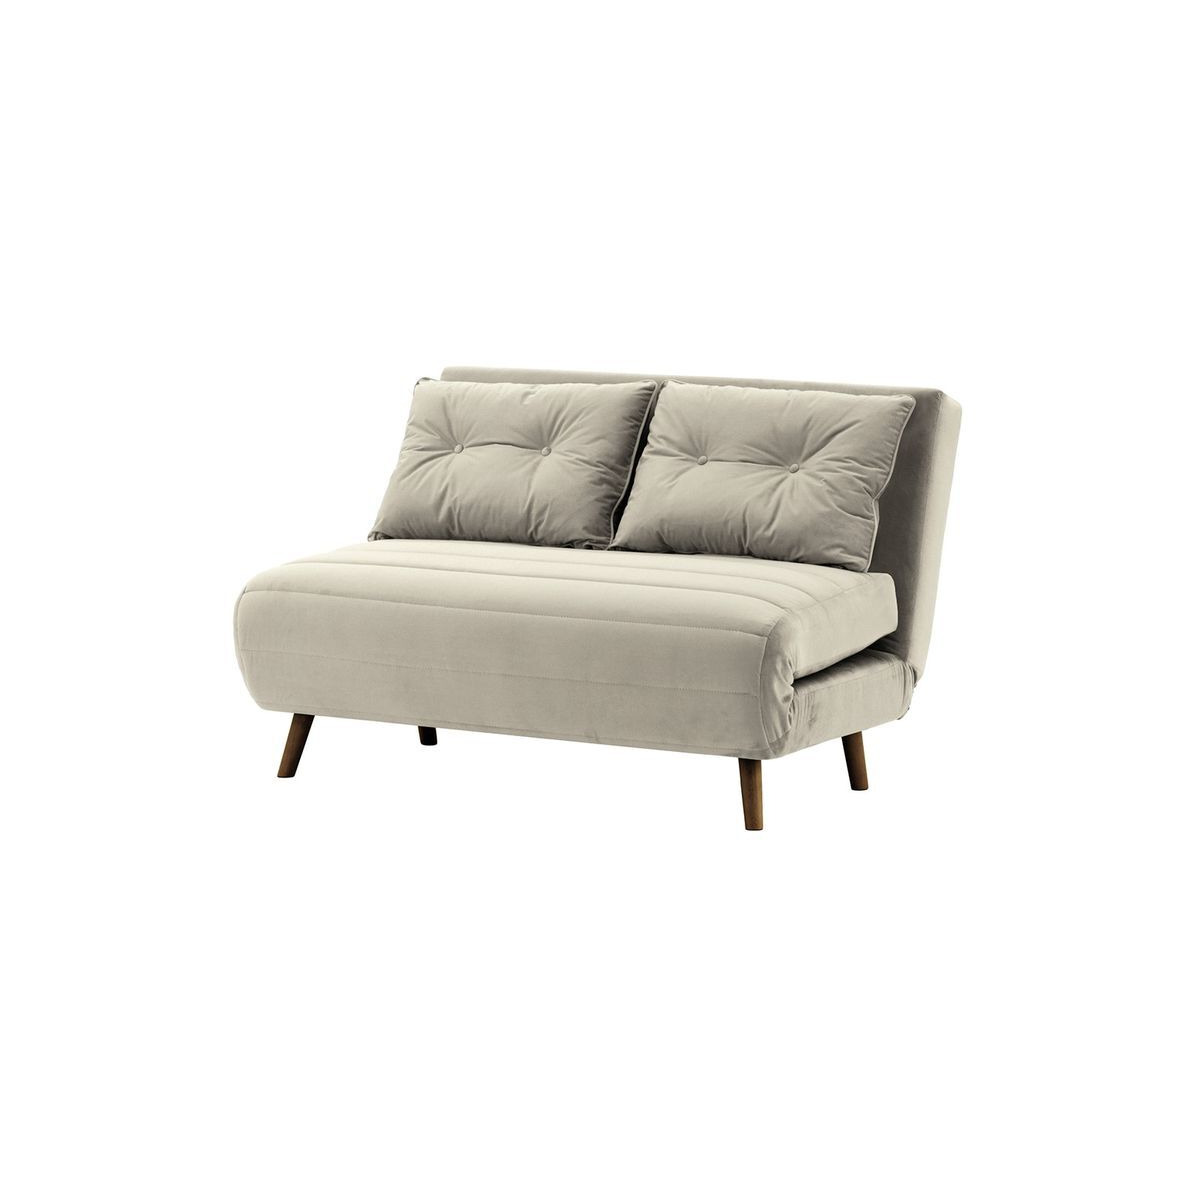 Flic Double Sofa Bed - width 120 cm, silver, Leg colour: dark oak - image 1